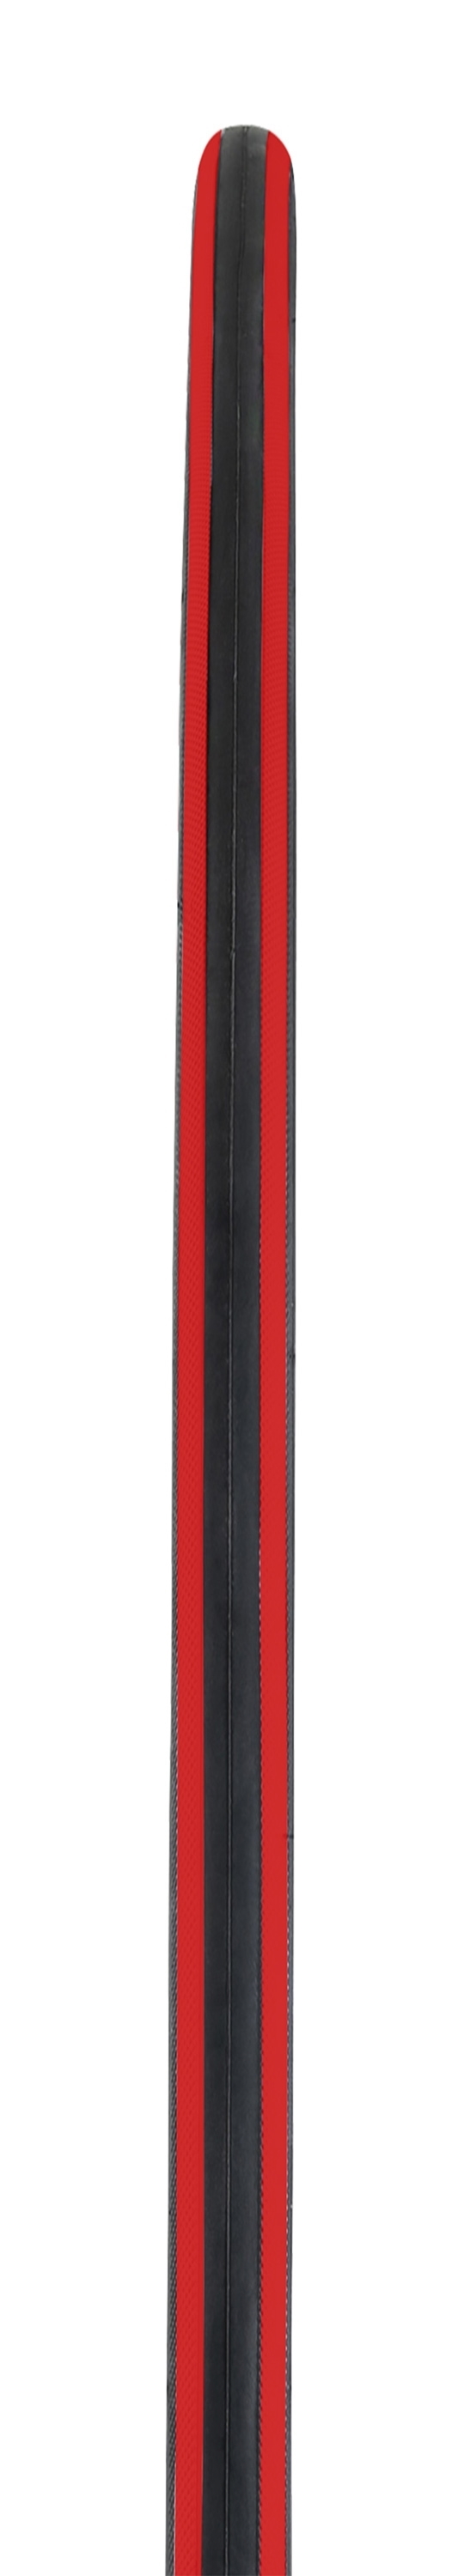 plášť FORCE ROAD 700 x 23C, drát, černo-červený